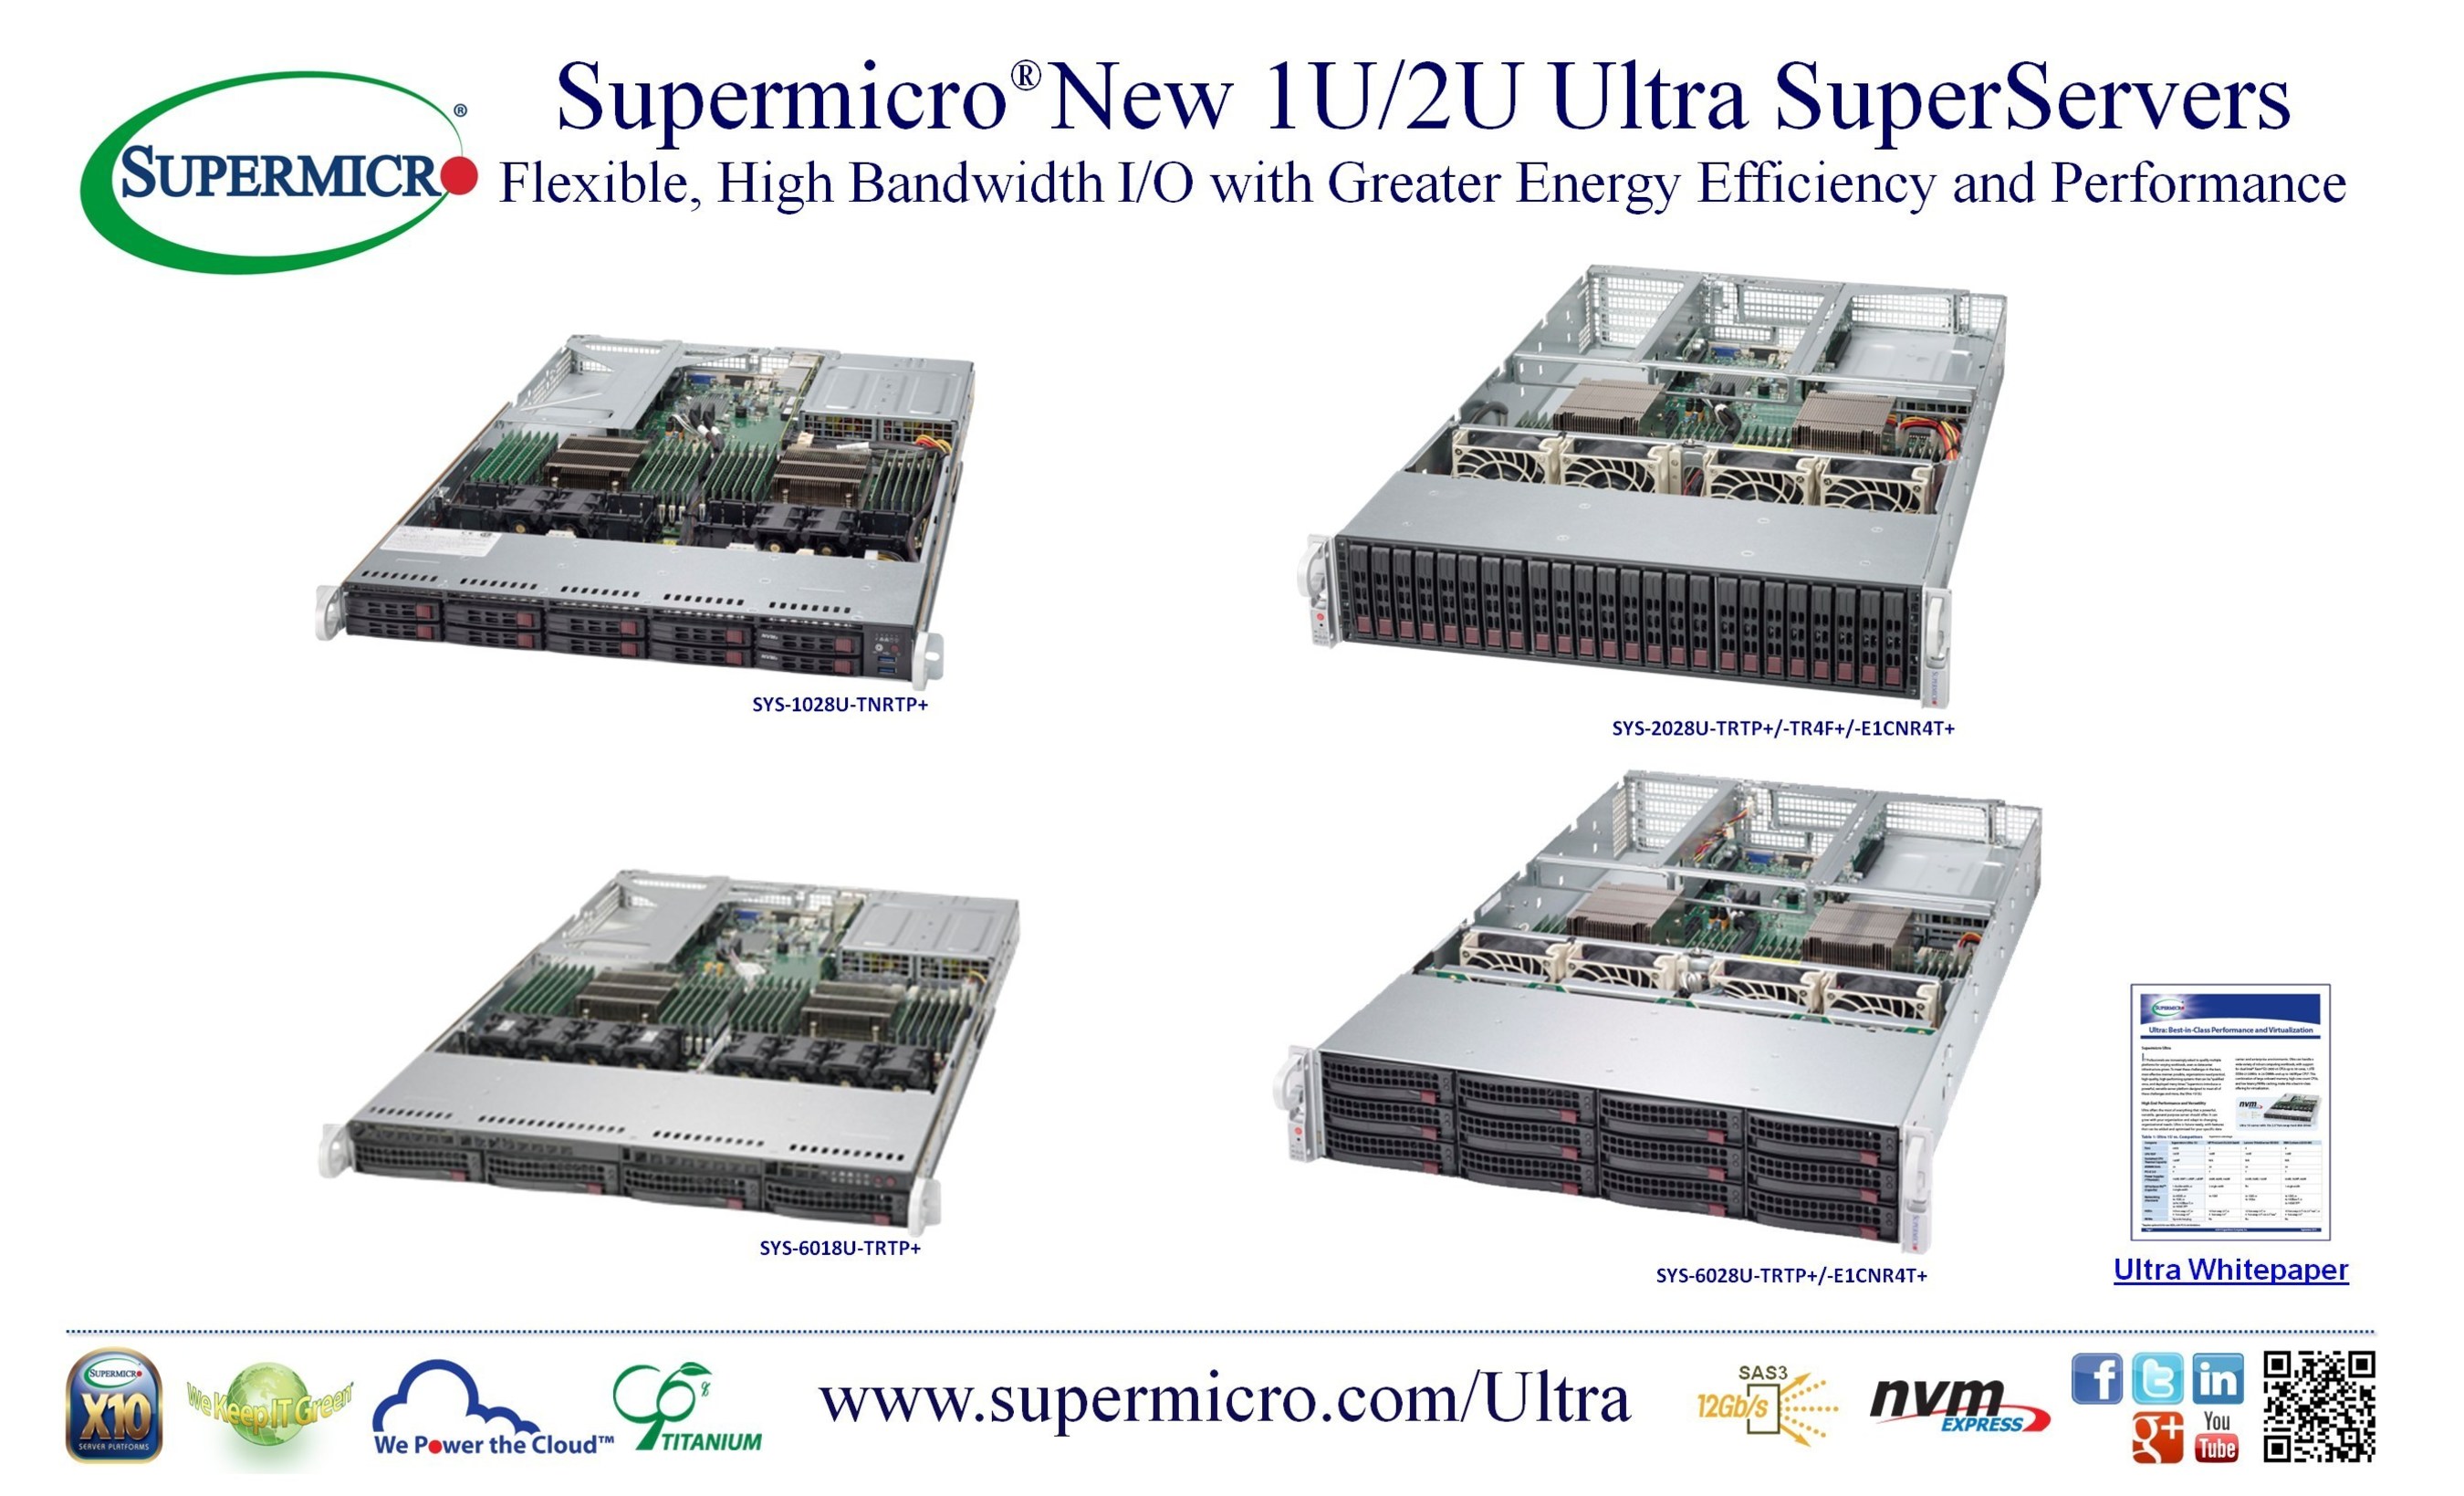 Supermicro(R) Ultra SuperServers - Flexible, Higher Bandwidth I/O, Efficiency & Performance